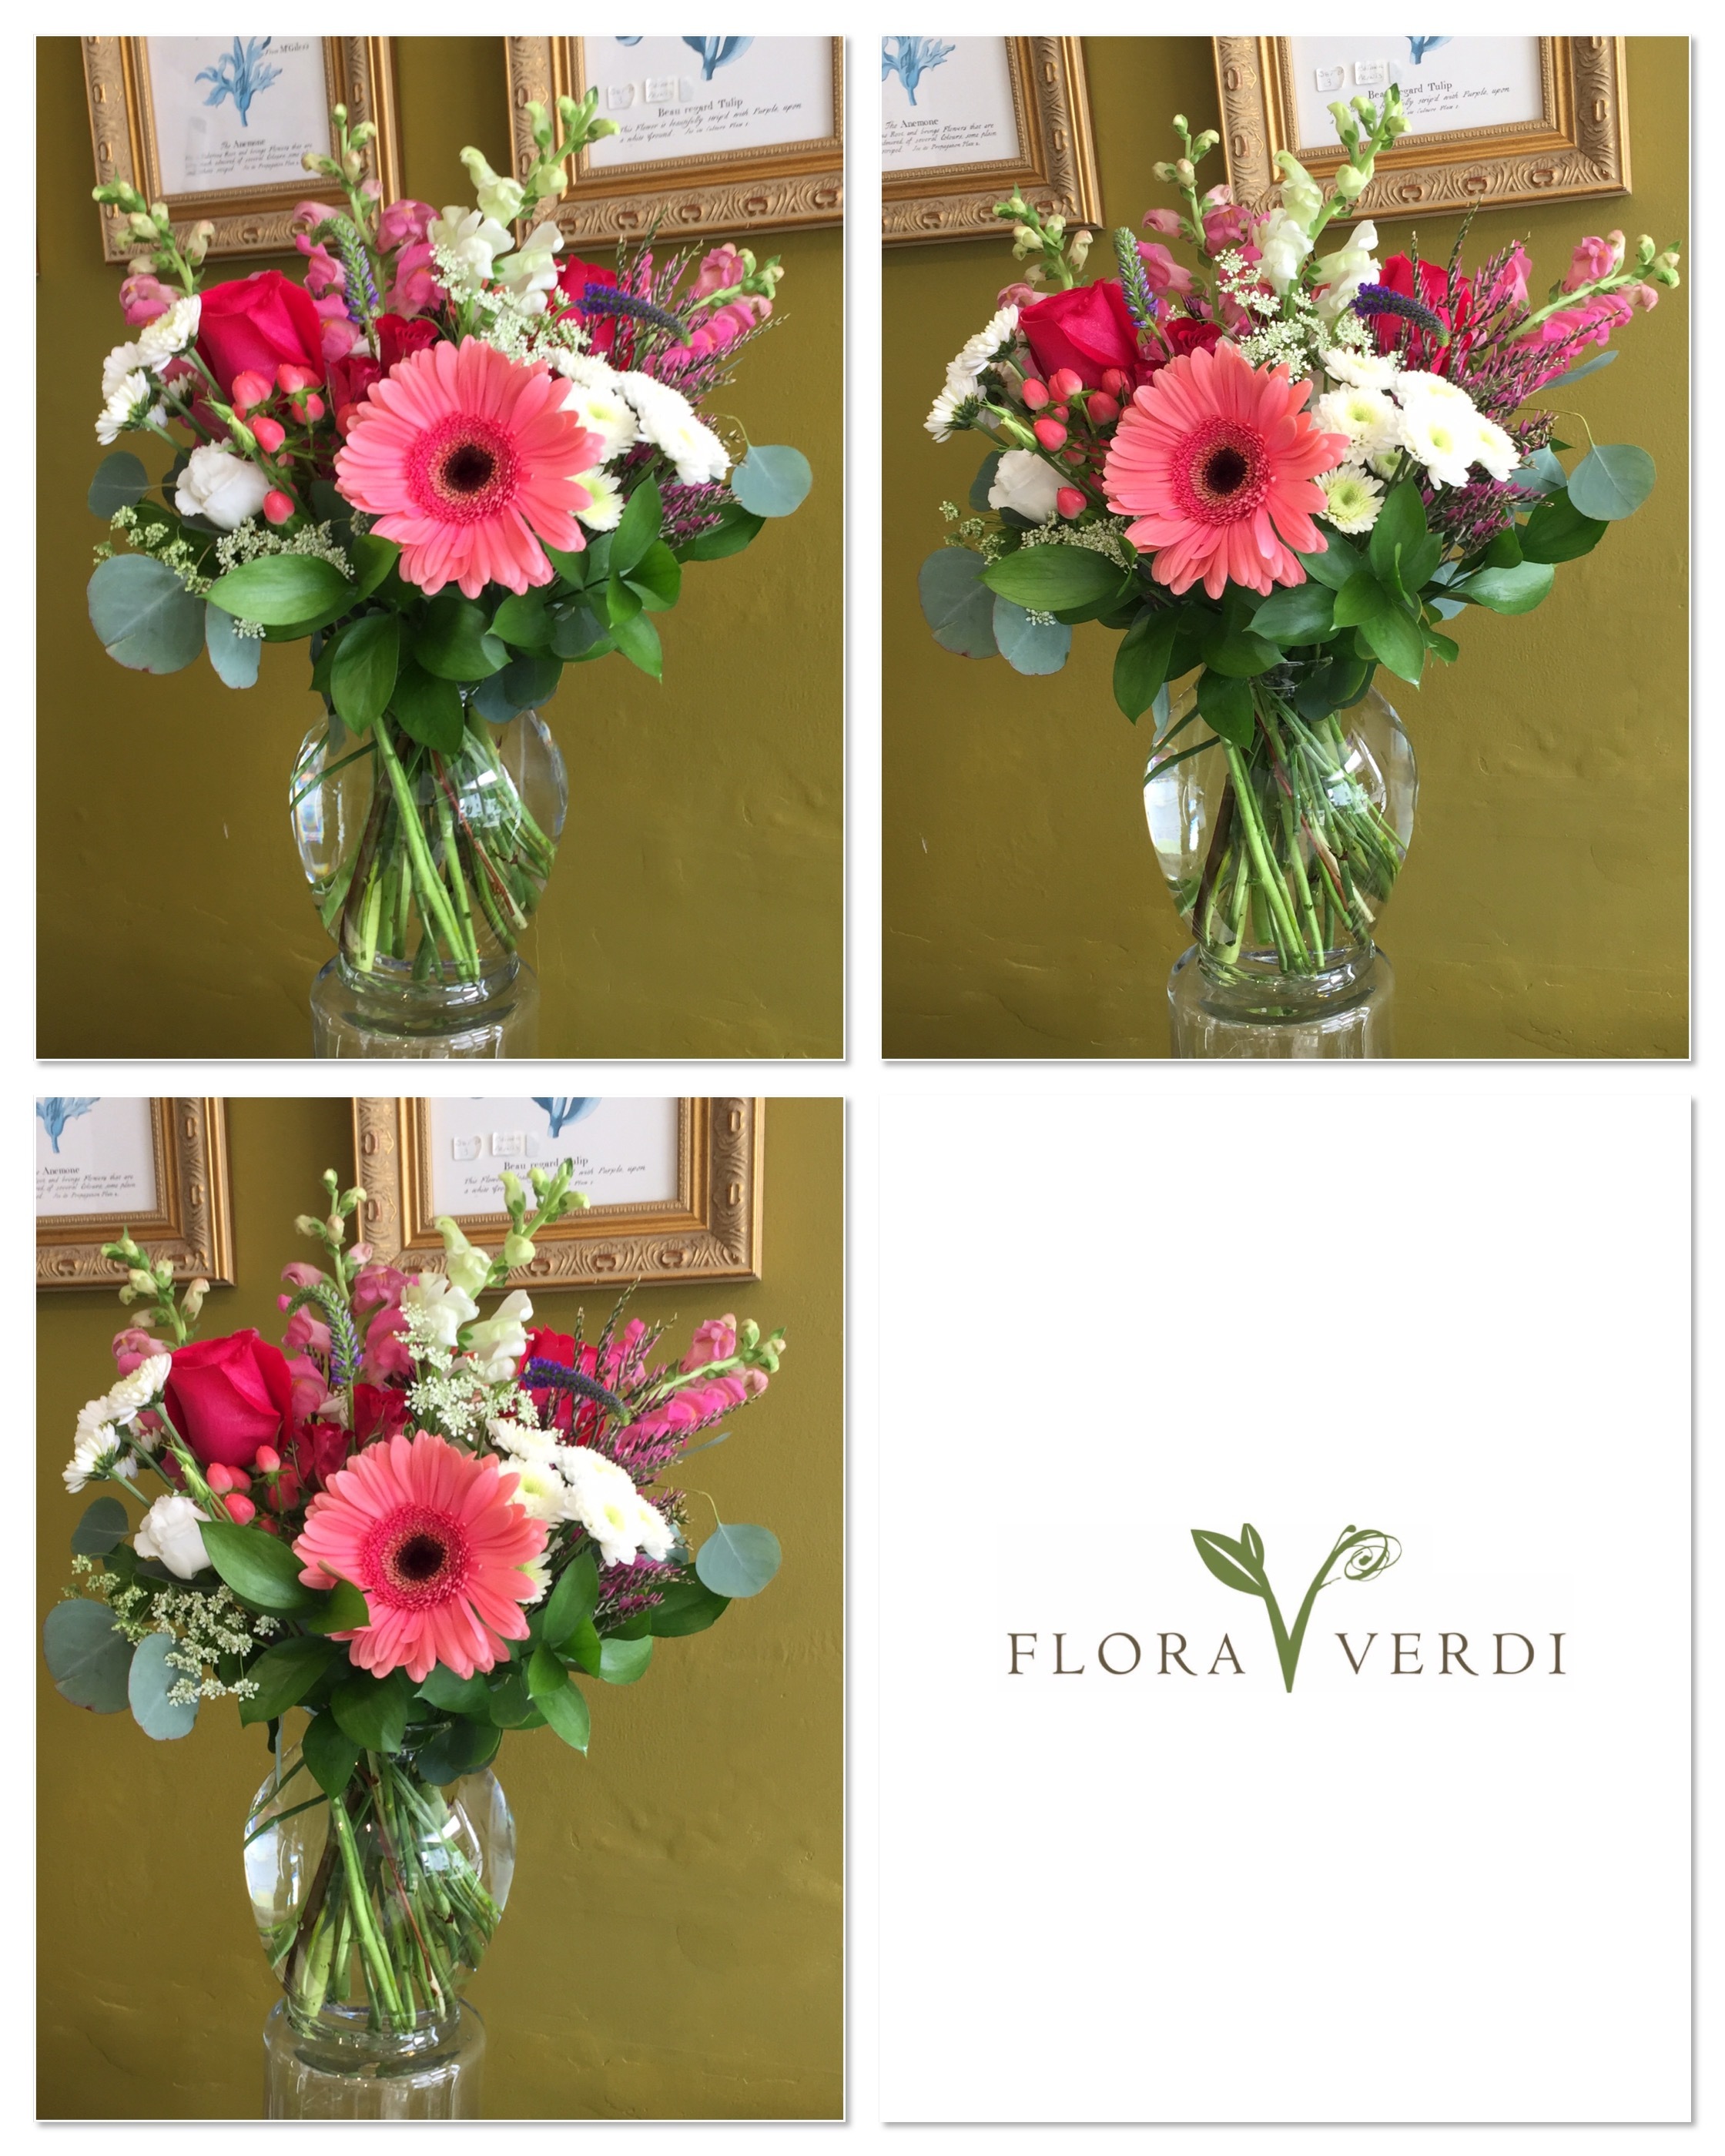 Wilmington Flowers Flora Verdi 910 815 8585 Wilmington Florist